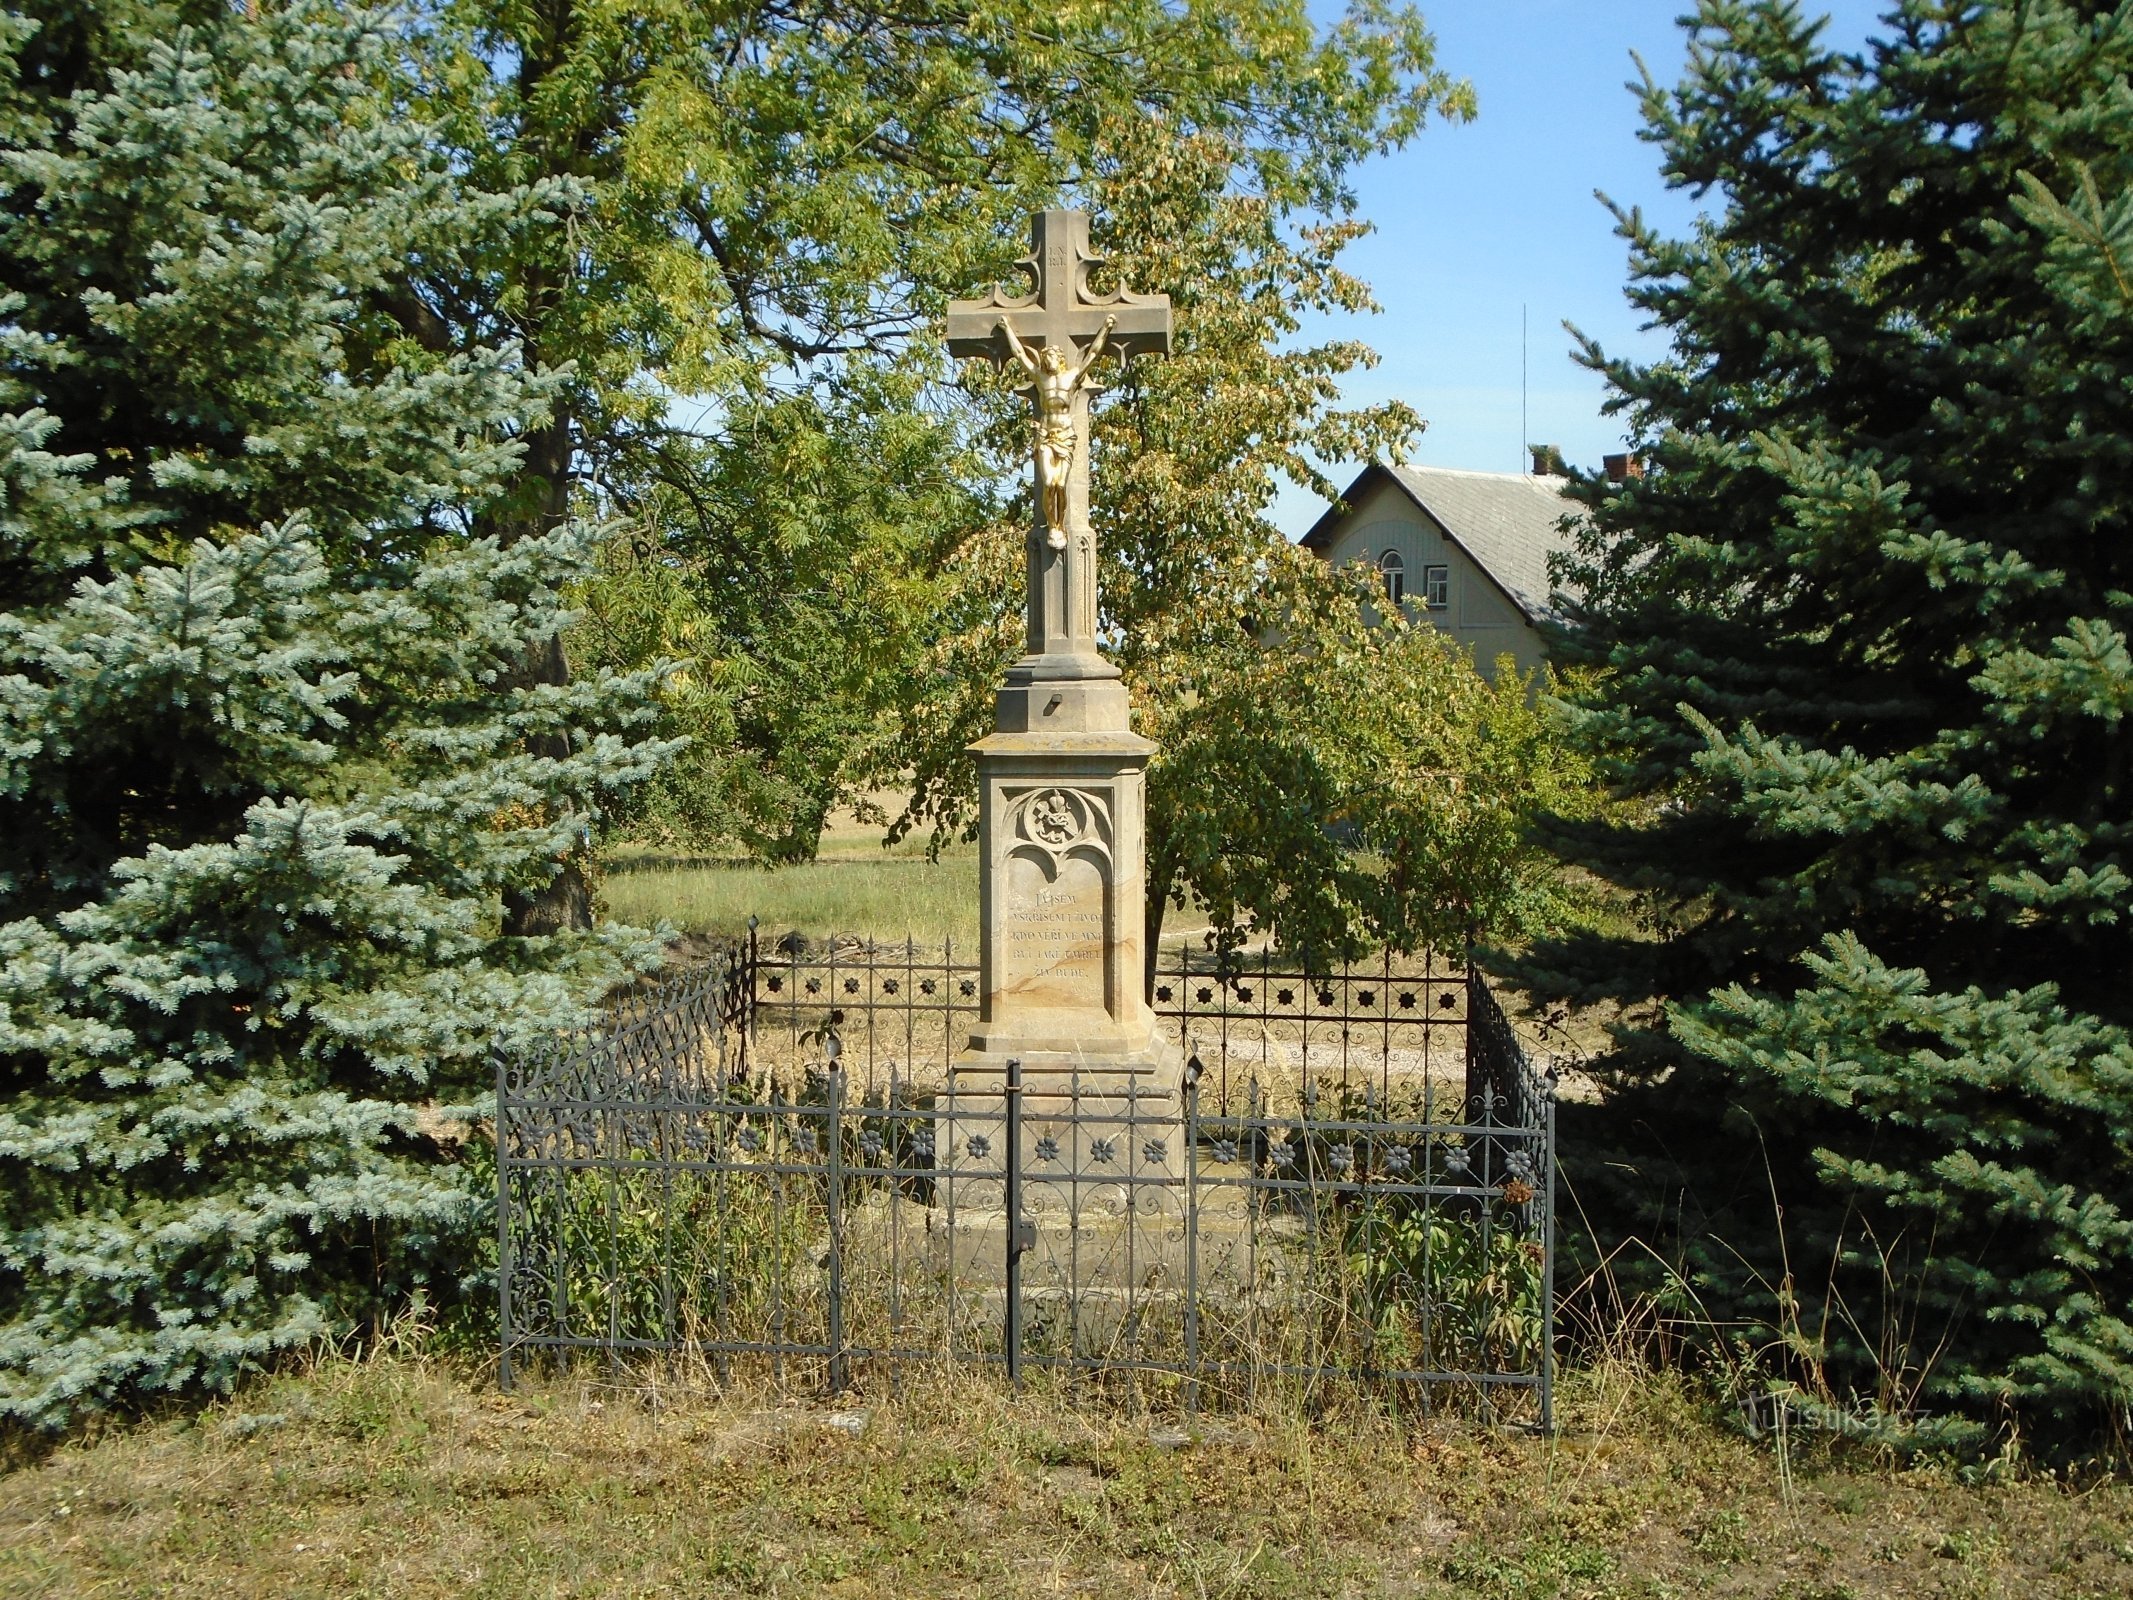 Cross (Horní Černilov, ngày 13.8.2018 tháng XNUMX năm XNUMX)